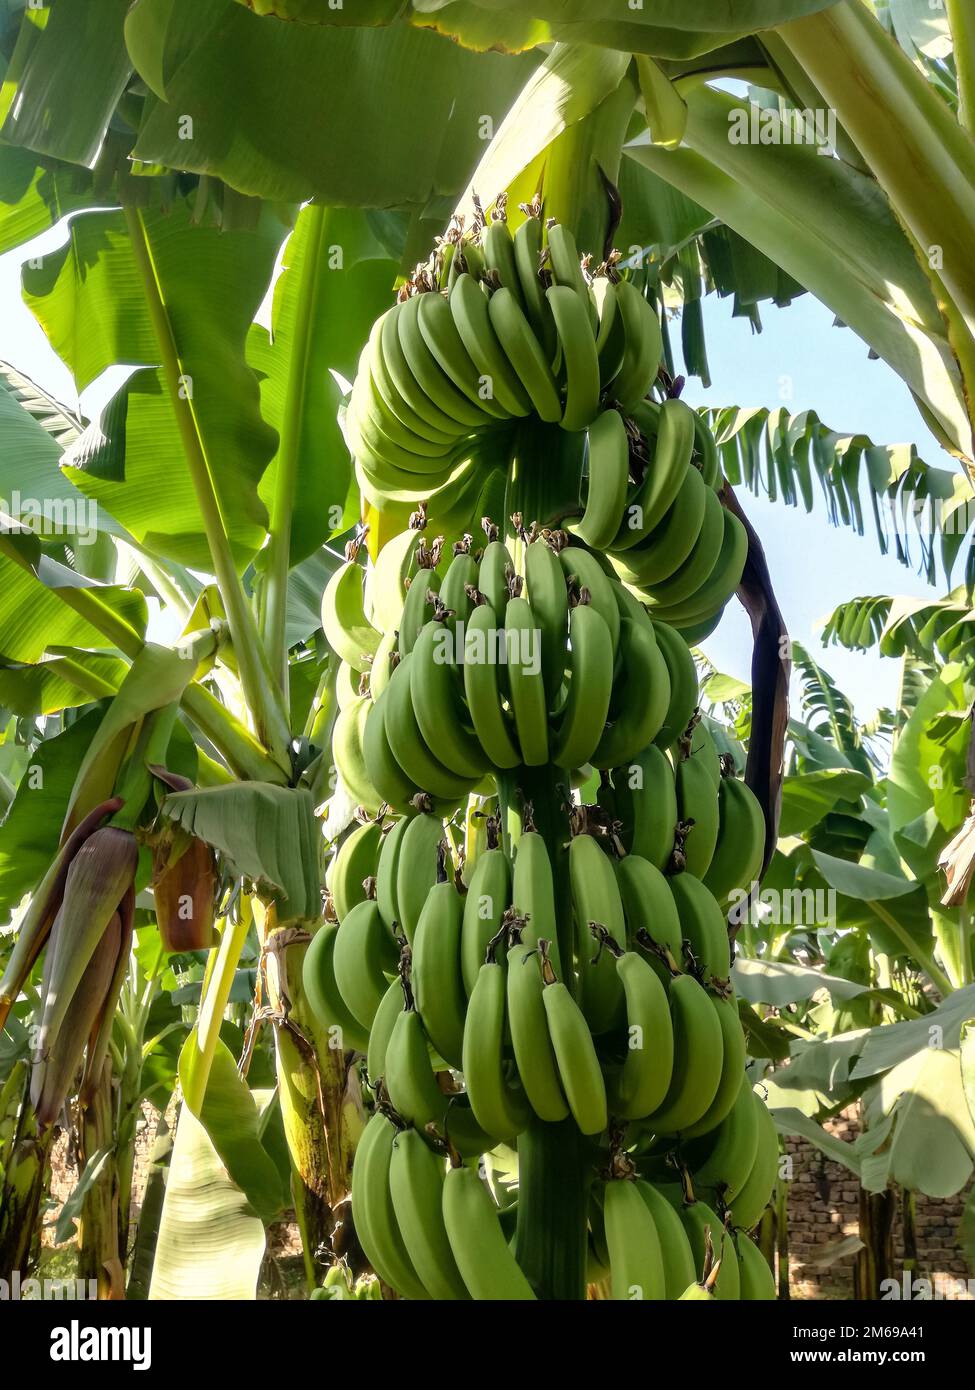 Banana grove, plantation. Banana trees with ripening bananas. Harvest coming soon. Vertical photo. Close-up. Selective focus. Stock Photo